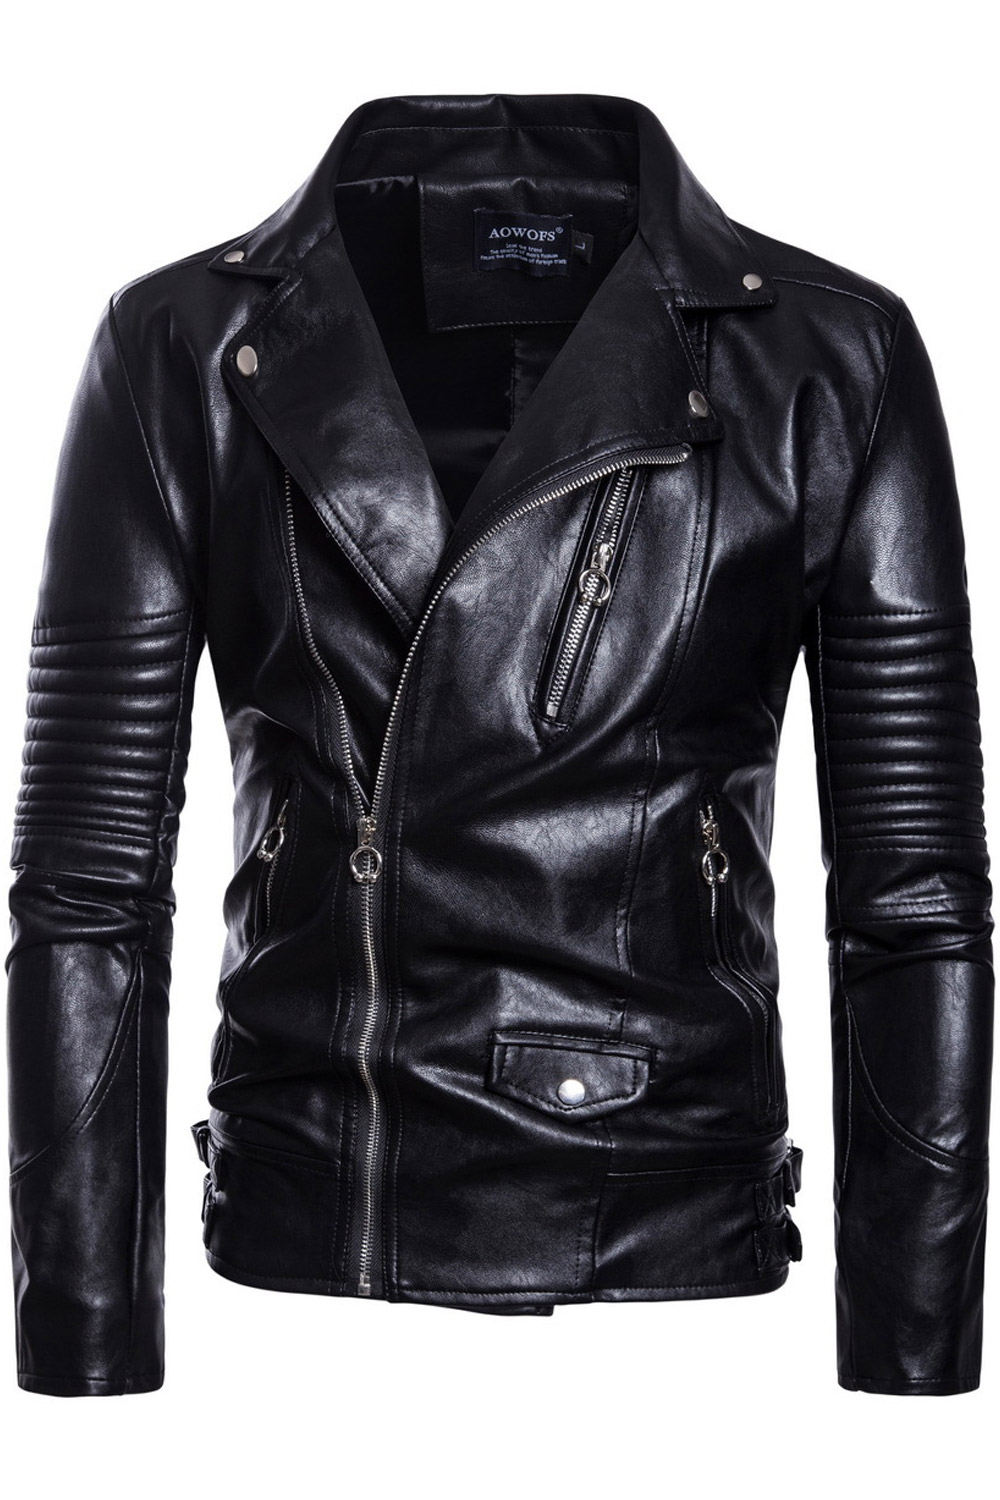 zara leather jacket mens